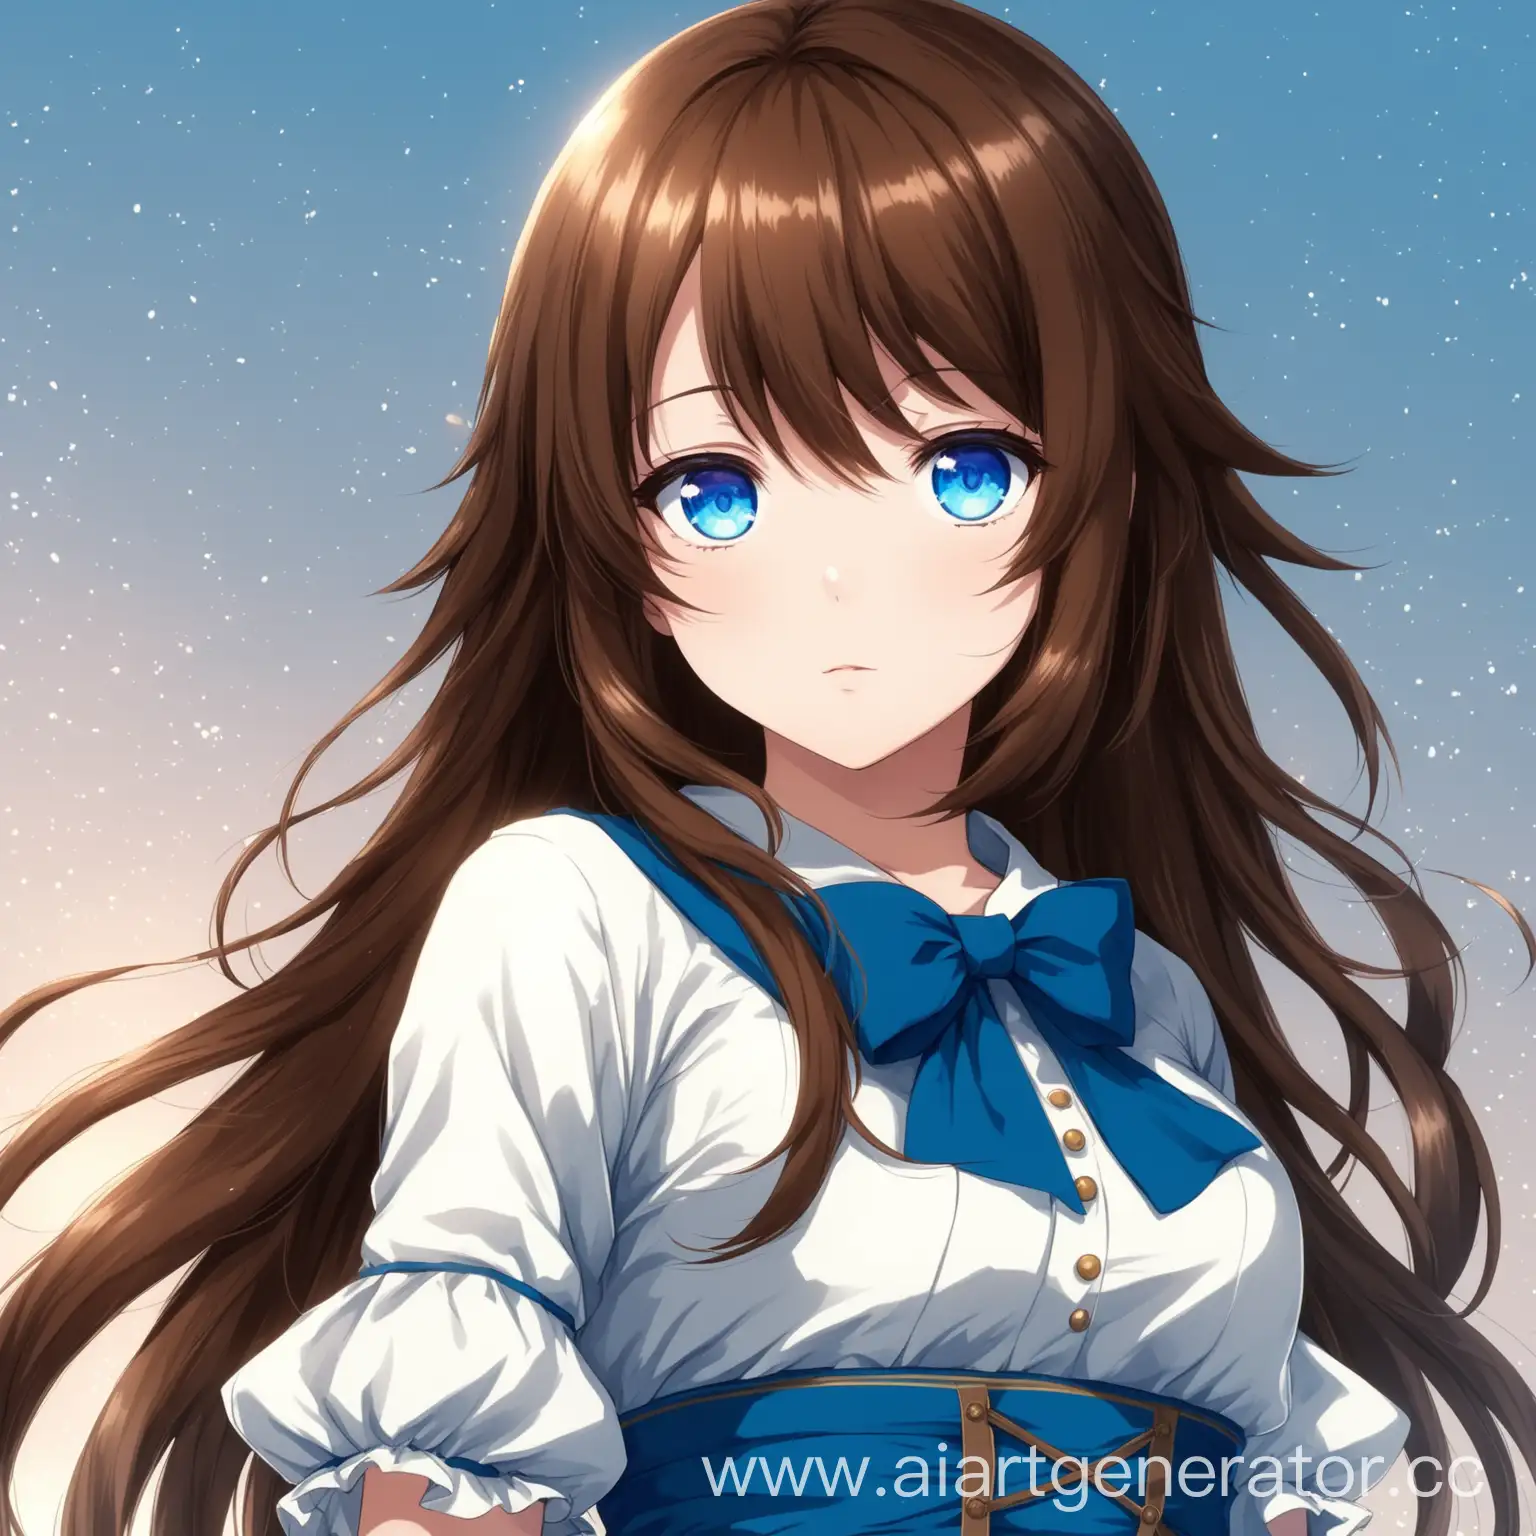 Elegant-Anime-Girl-with-WaistLength-Brown-Hair-and-Stunning-Blue-Eyes